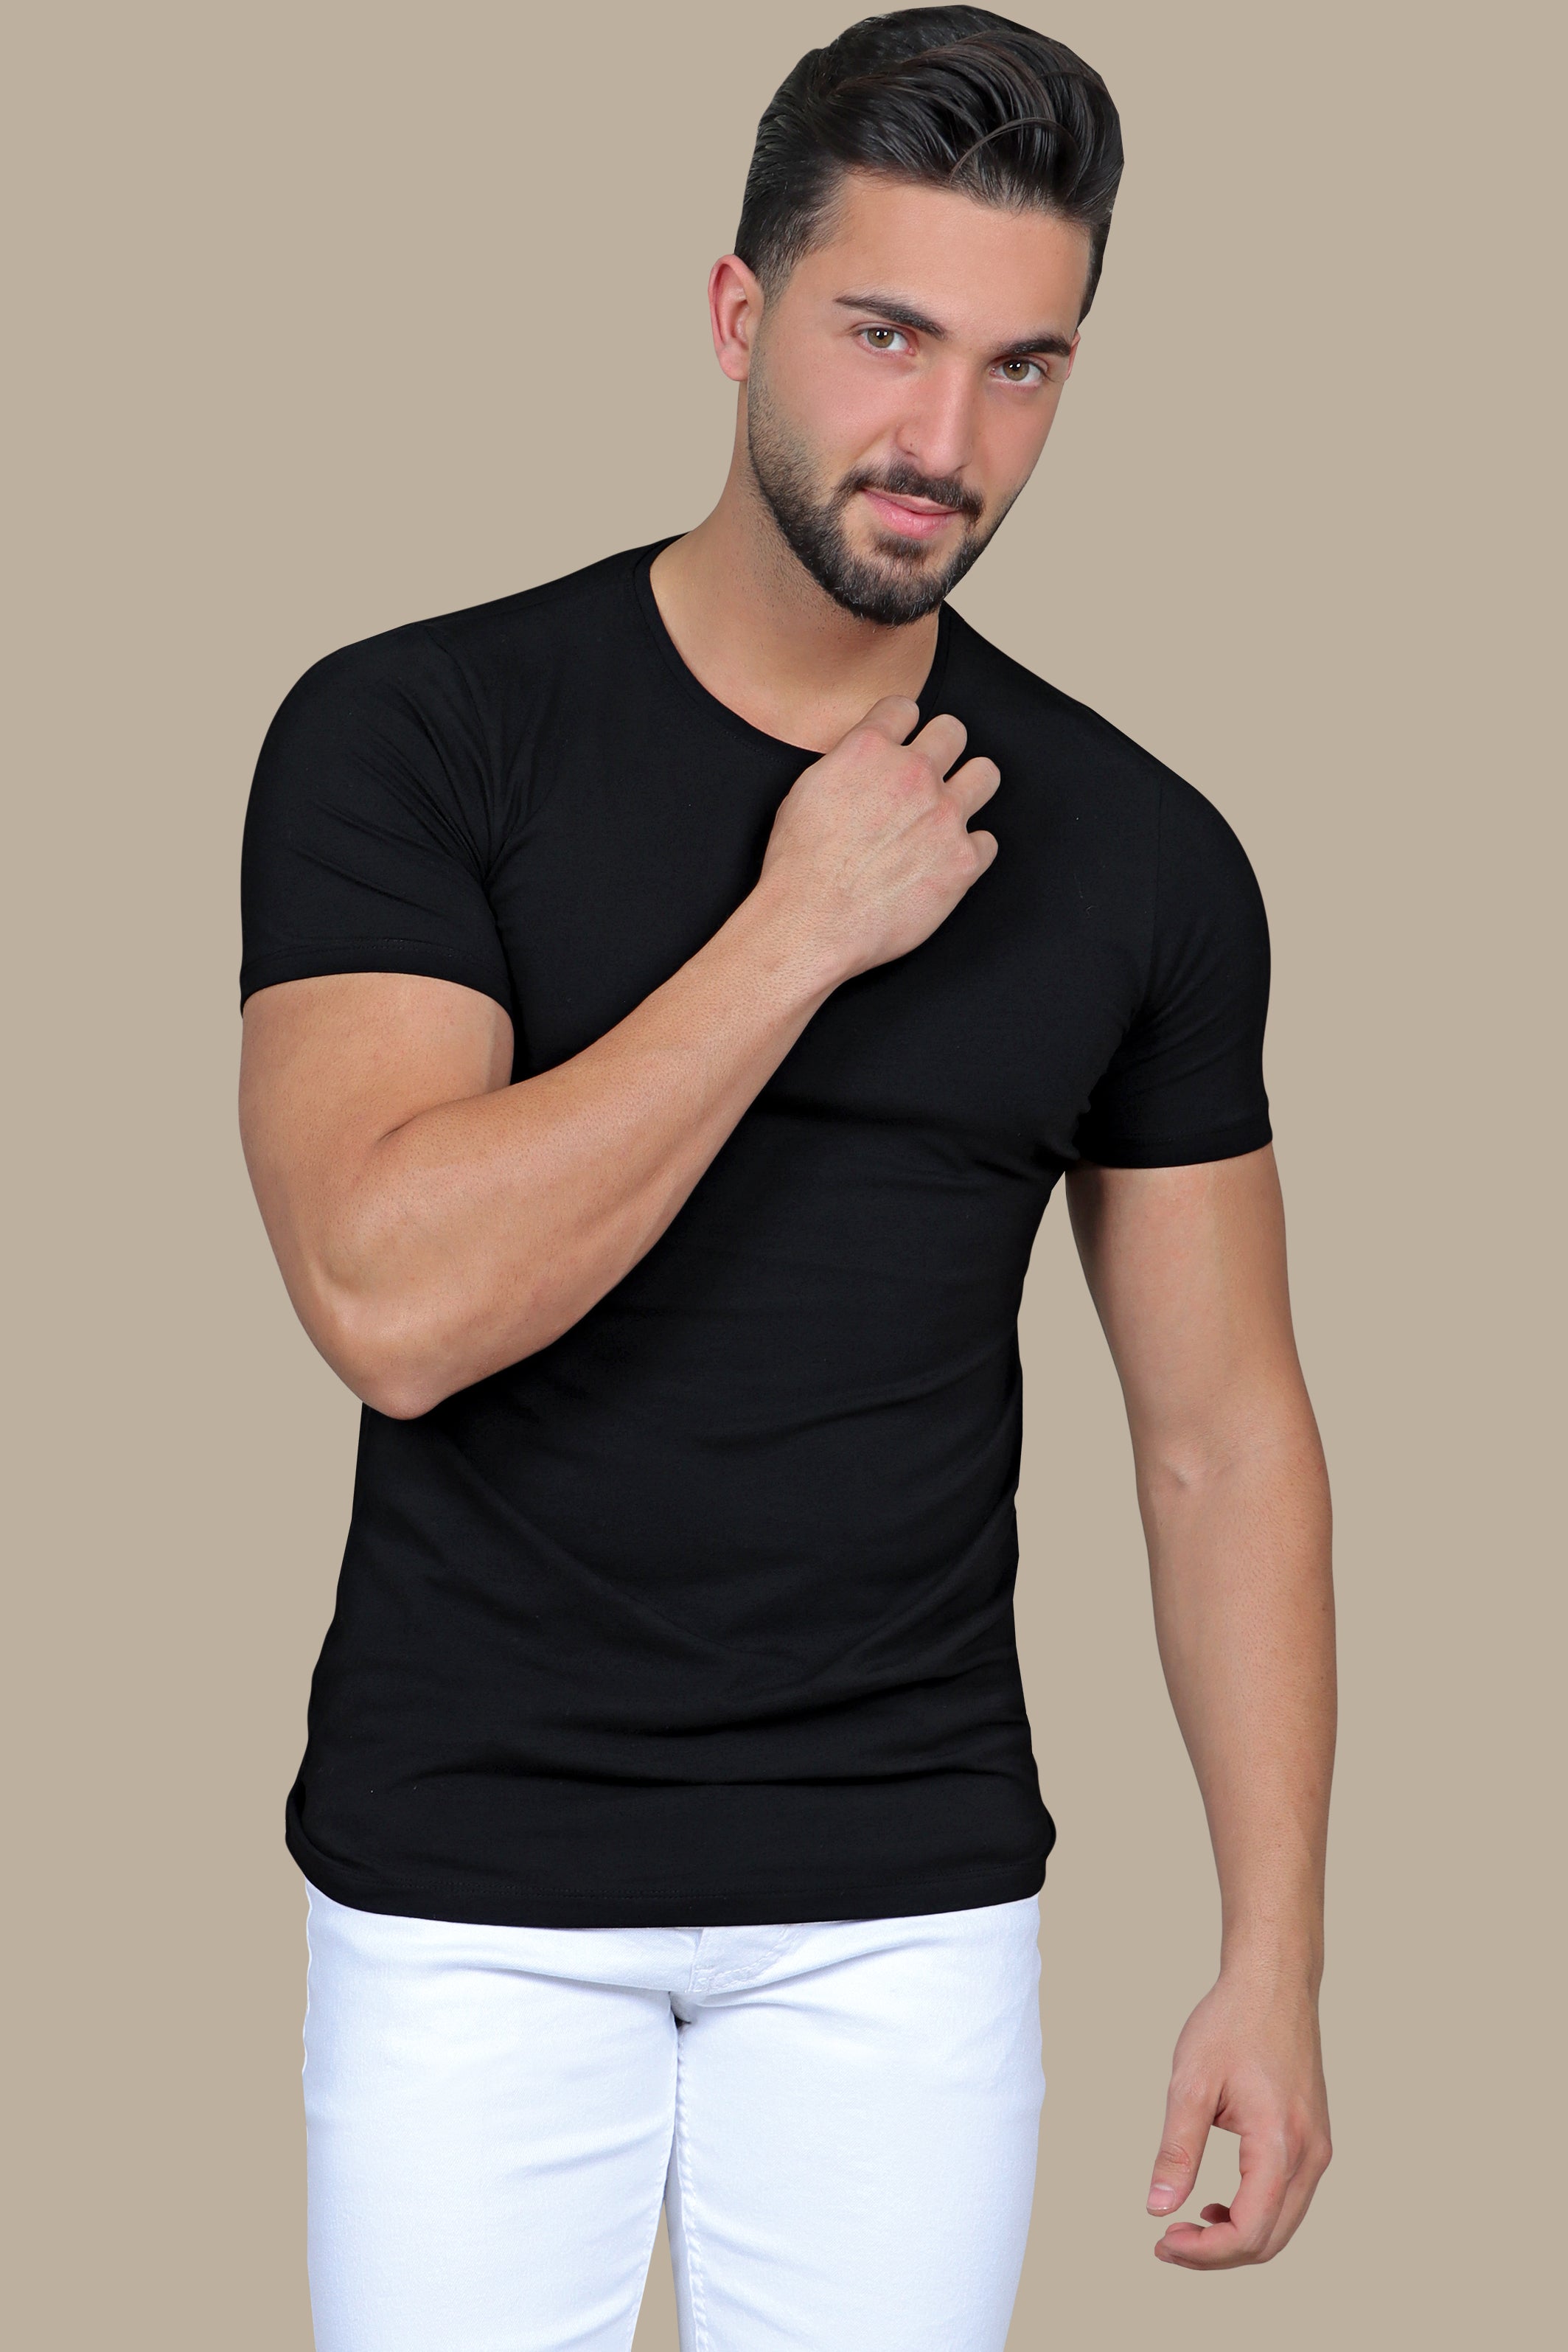 Classic Noir: Black Short Sleeve Basic T-Shirt